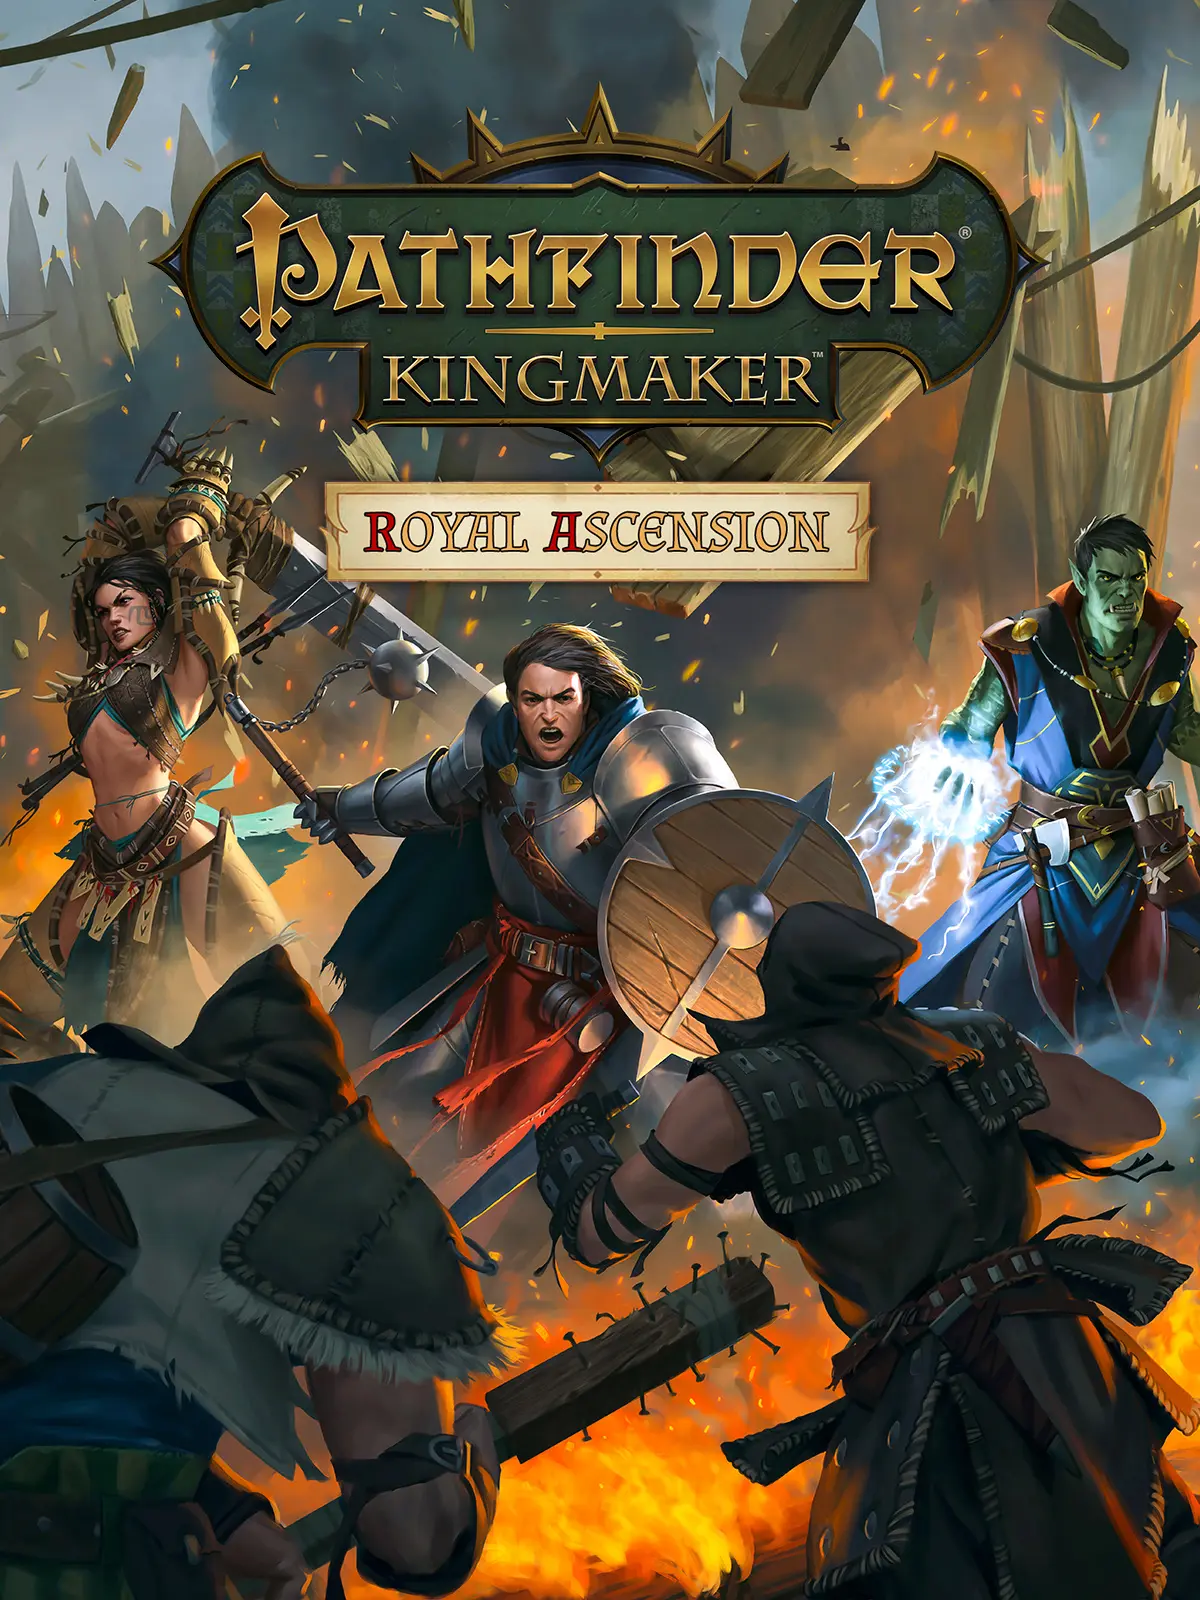 Pathfinder Kingmaker - Royal Ascension DLC (PC / Mac / Linux) - Steam - Digital Code